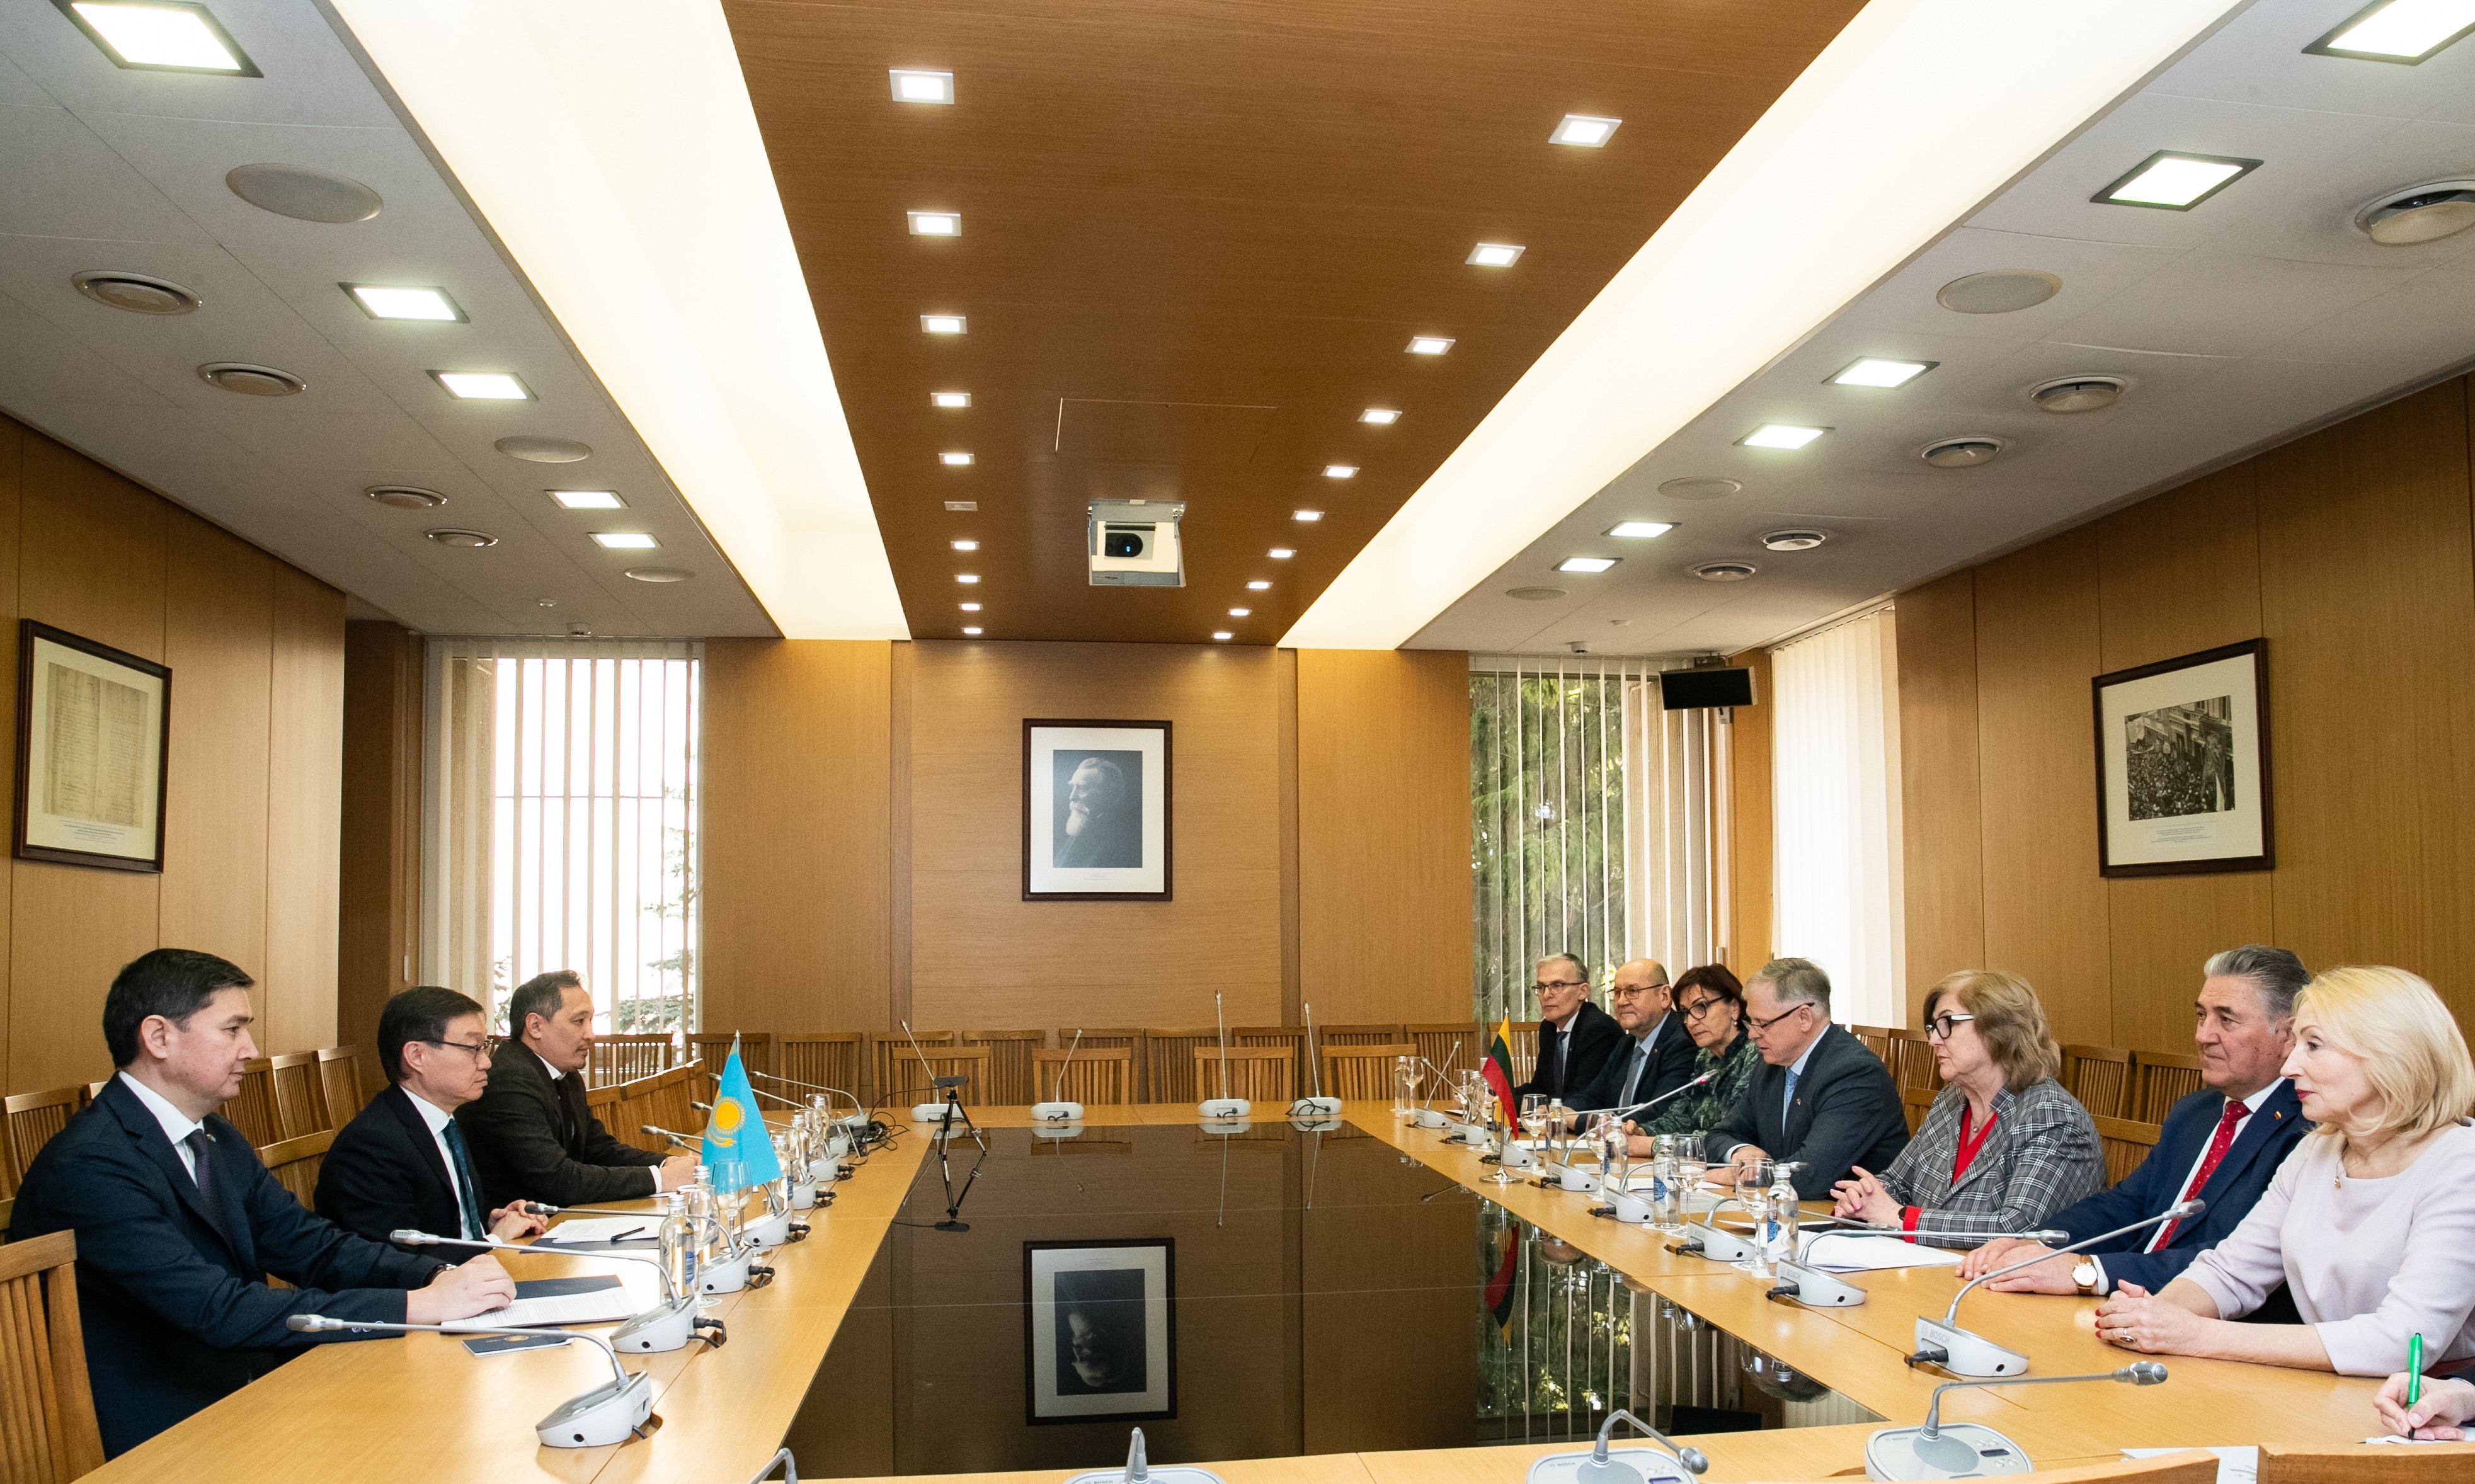 Lithuanian Parliamentarians are Interested in Kazakhstan's Socio-economic Development Plans